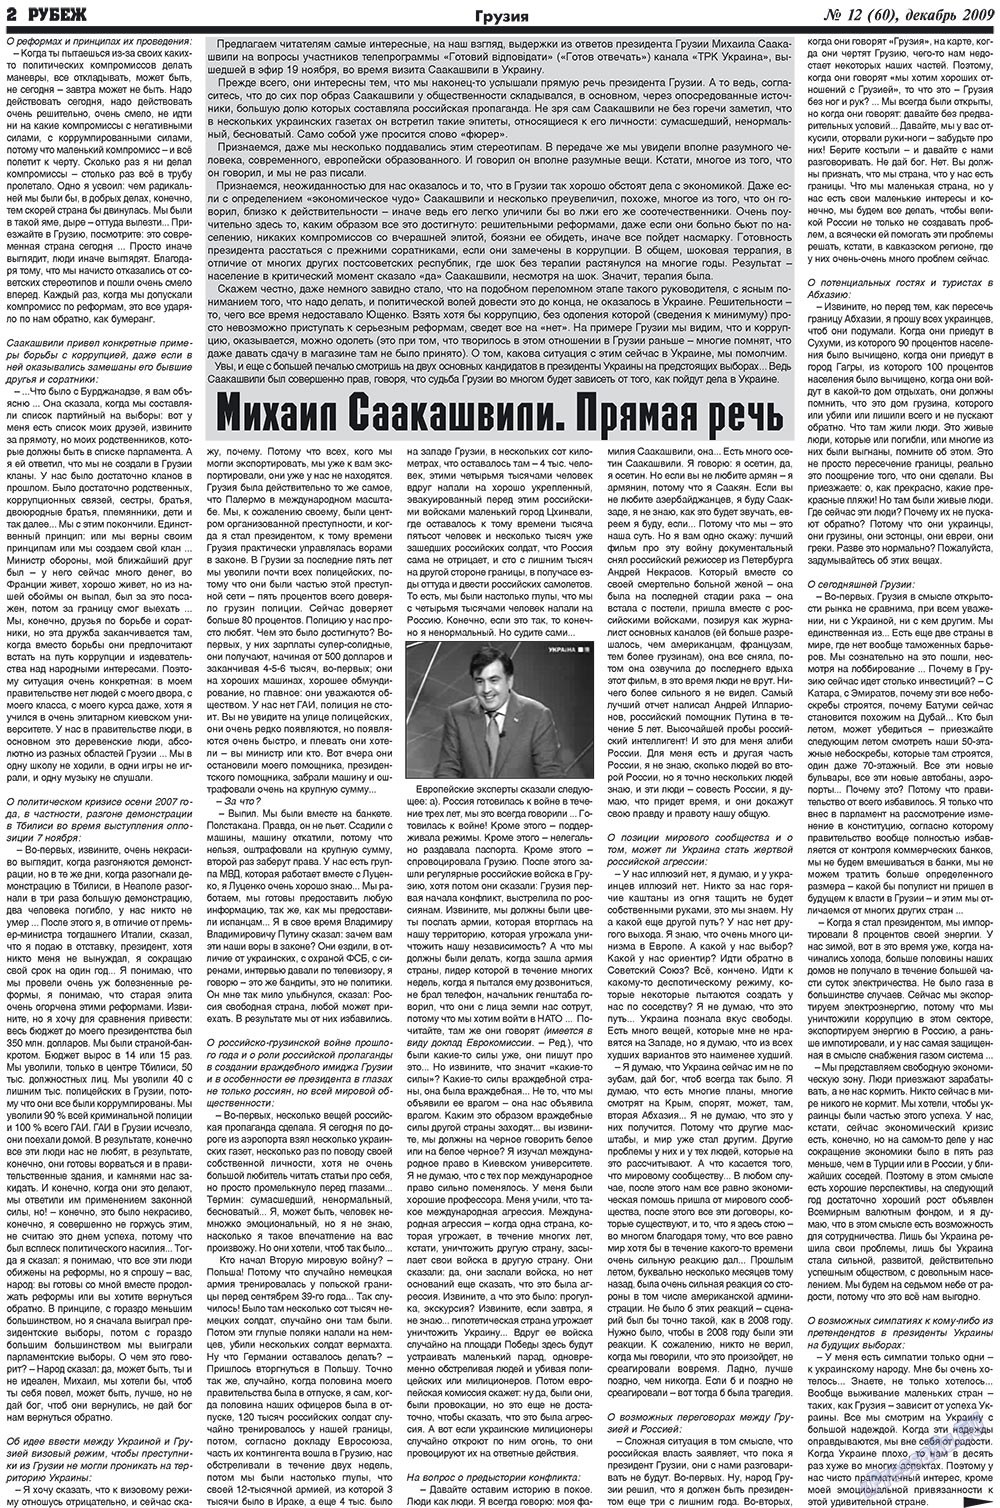 Рубеж, газета. 2009 №12 стр.2